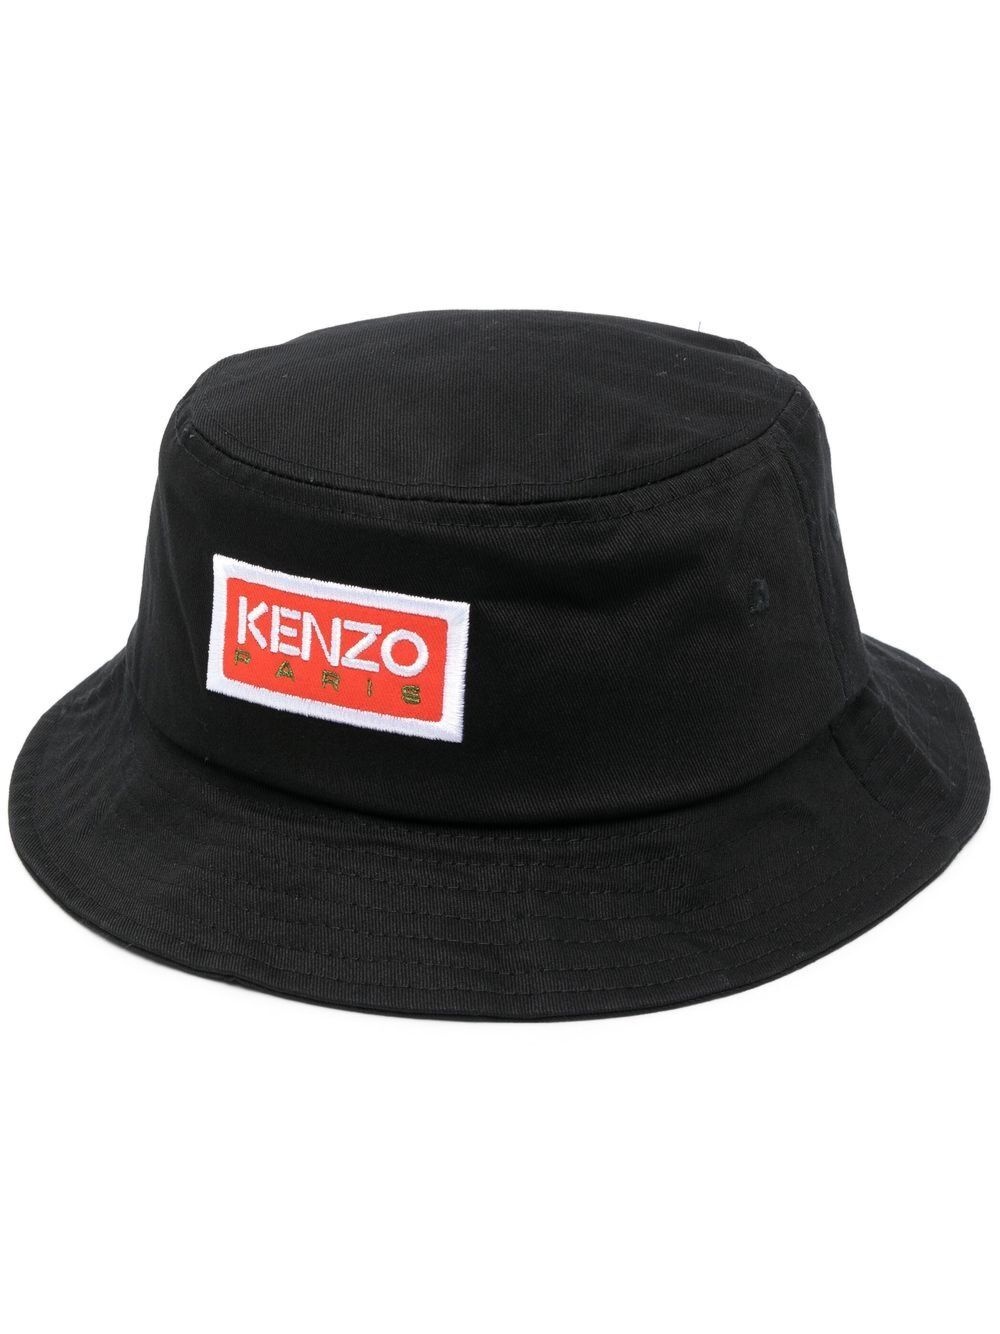 Kenzo paris sun hat - 1